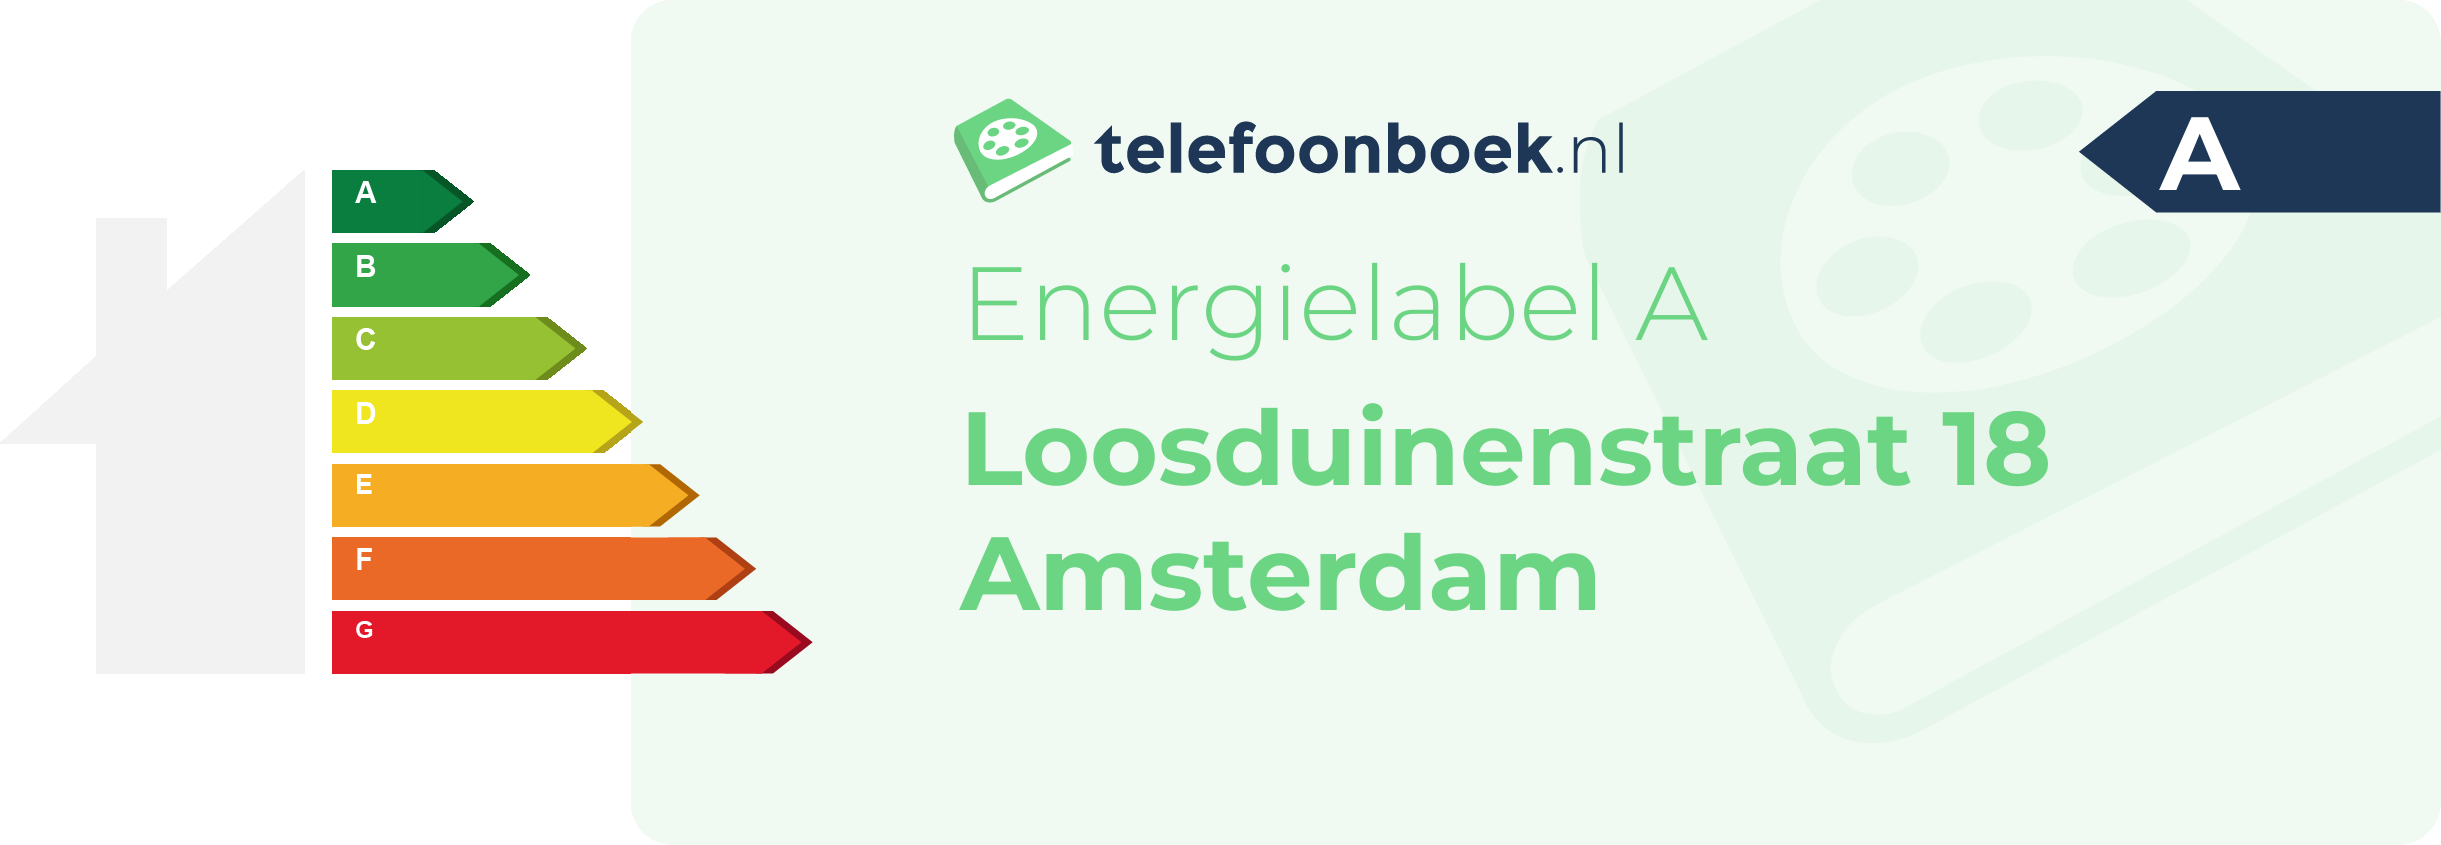 Energielabel Loosduinenstraat 18 Amsterdam